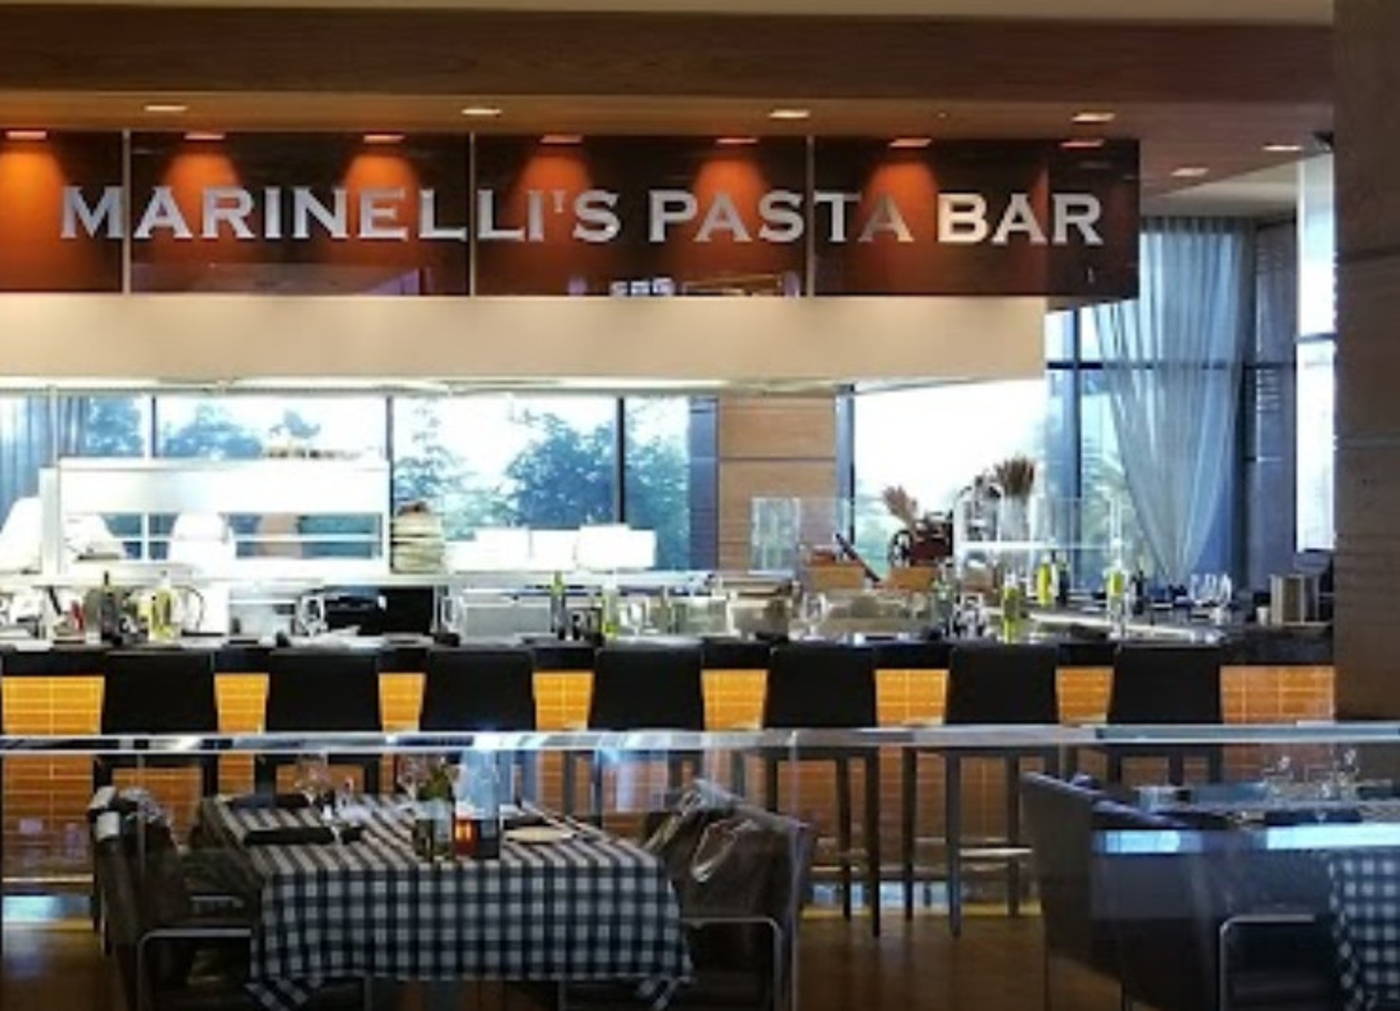 Marinelli's Pasta Bar at The M Resort Las Vegas